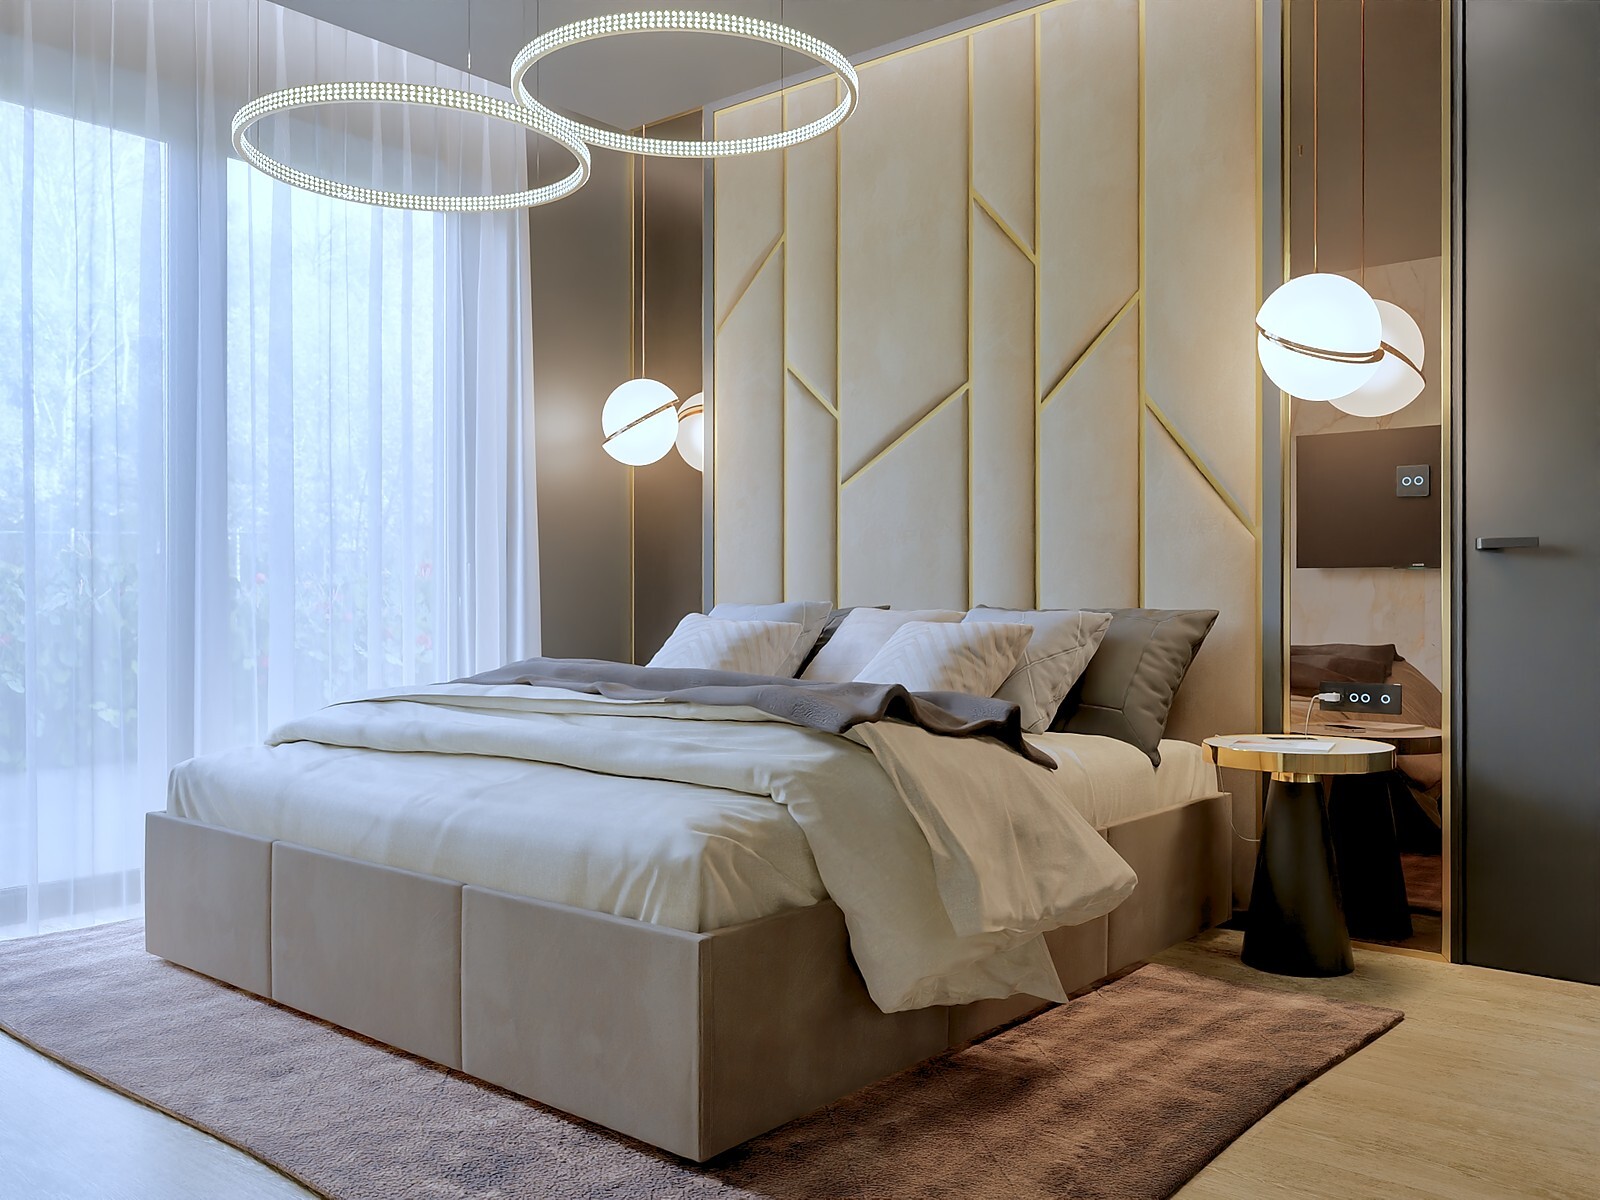 Bedroom Interior Archviz - Blender Cycles X